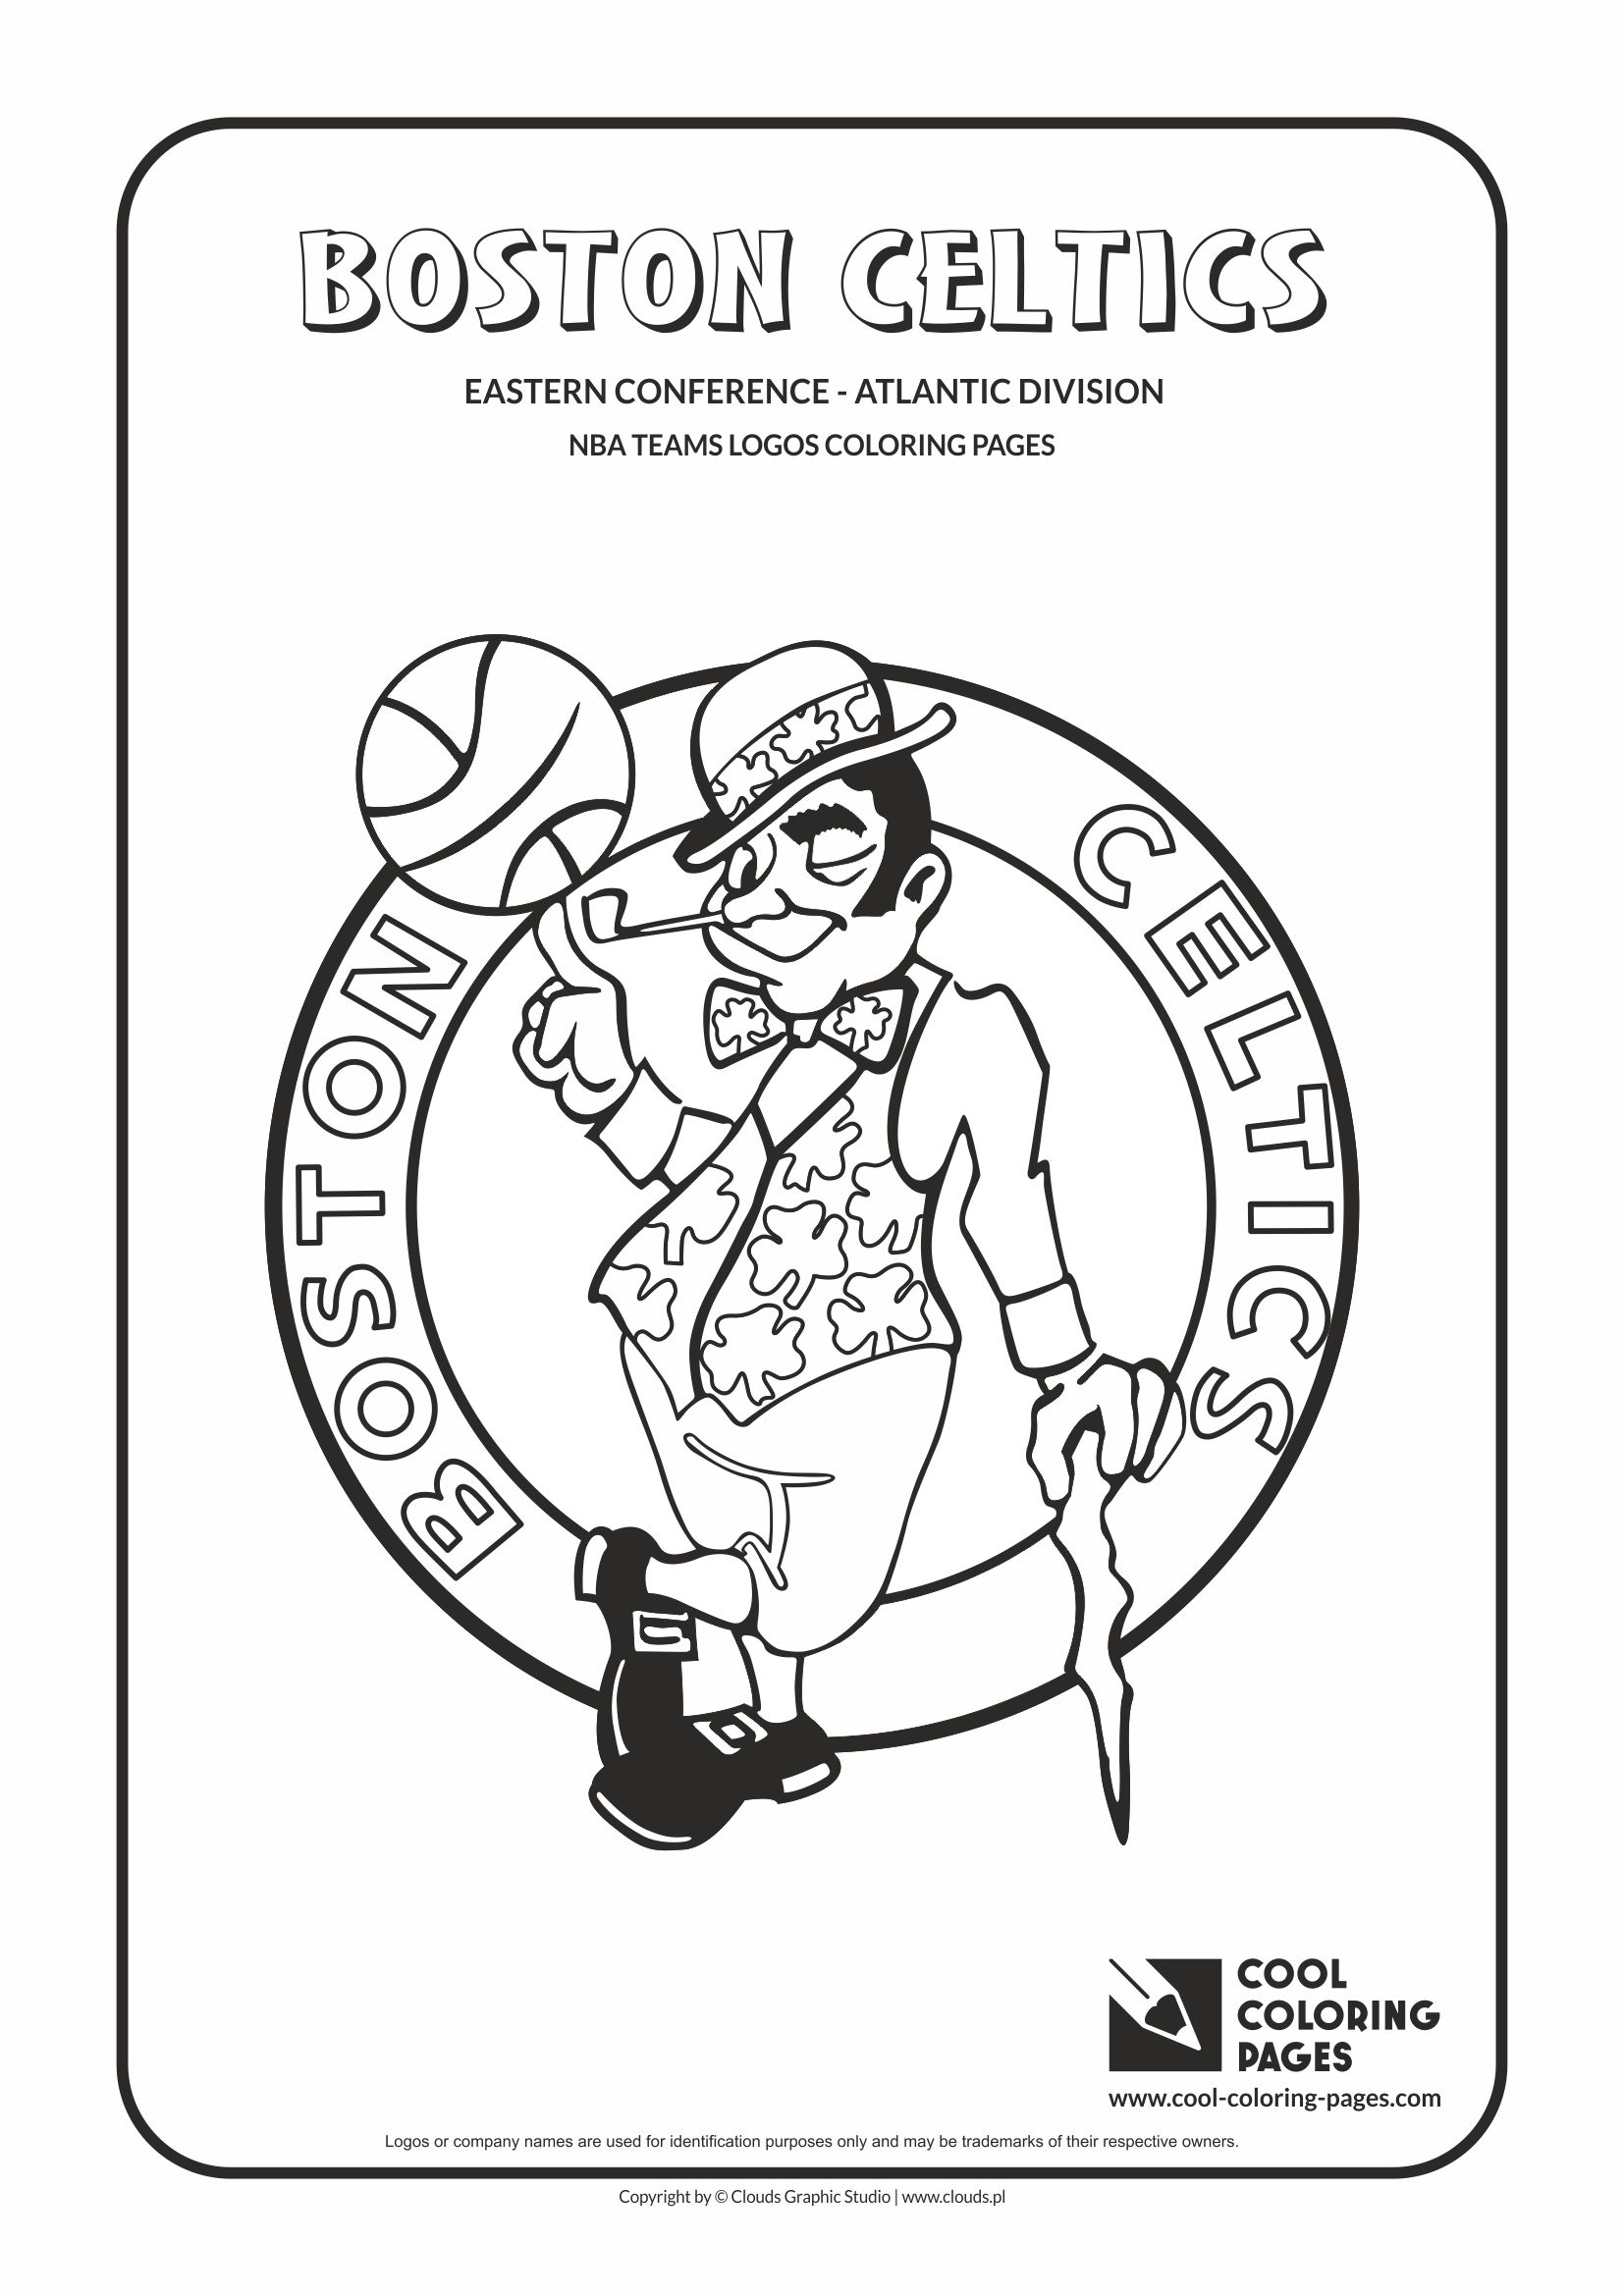 Cool Coloring Pages Boston Celtics - NBA basketball teams logos ...